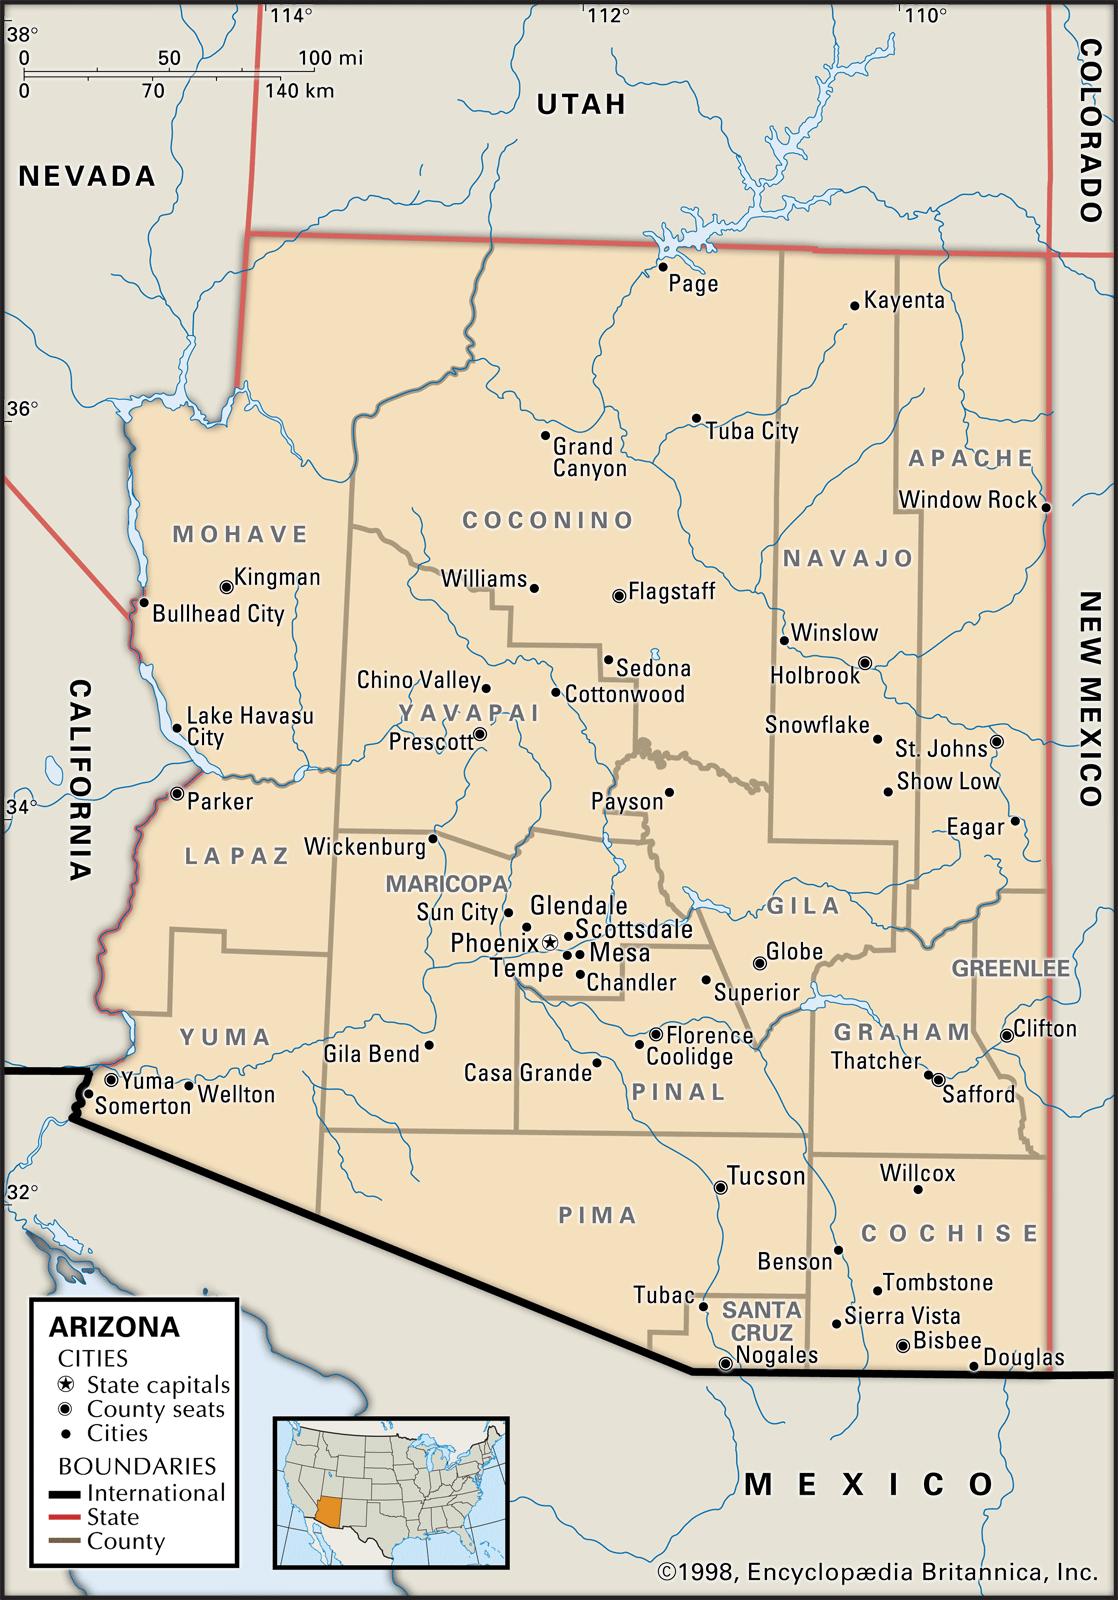 Geography Blog: Map of Arizona